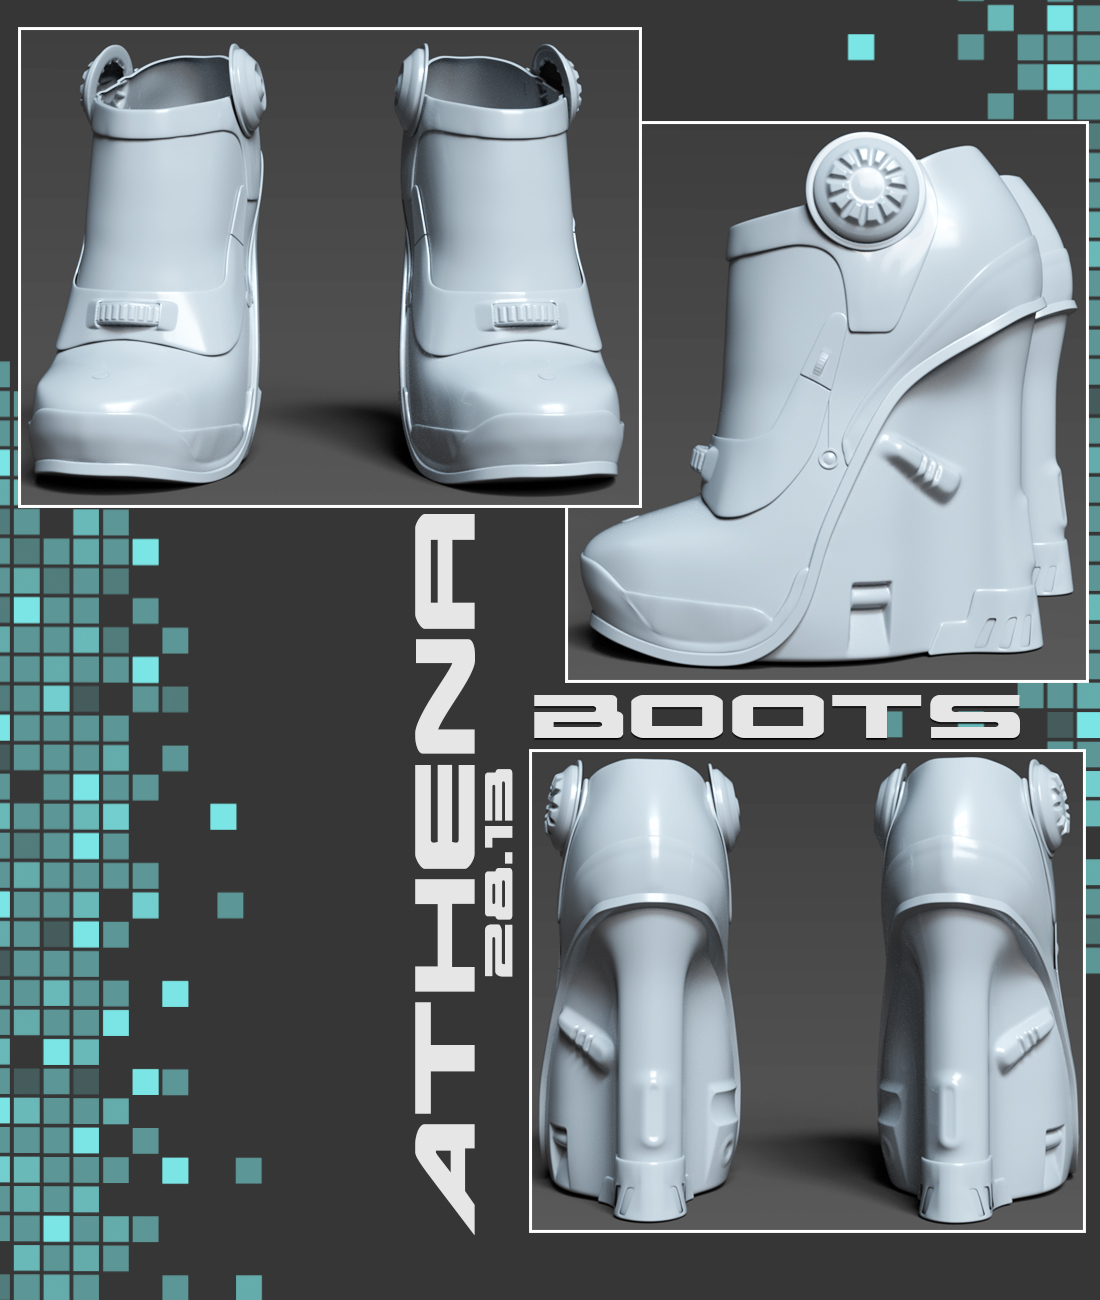 Athena HD Cyborg for Genesis 8.1 Female by: Pixelunashadownet, 3D Models by Daz 3D